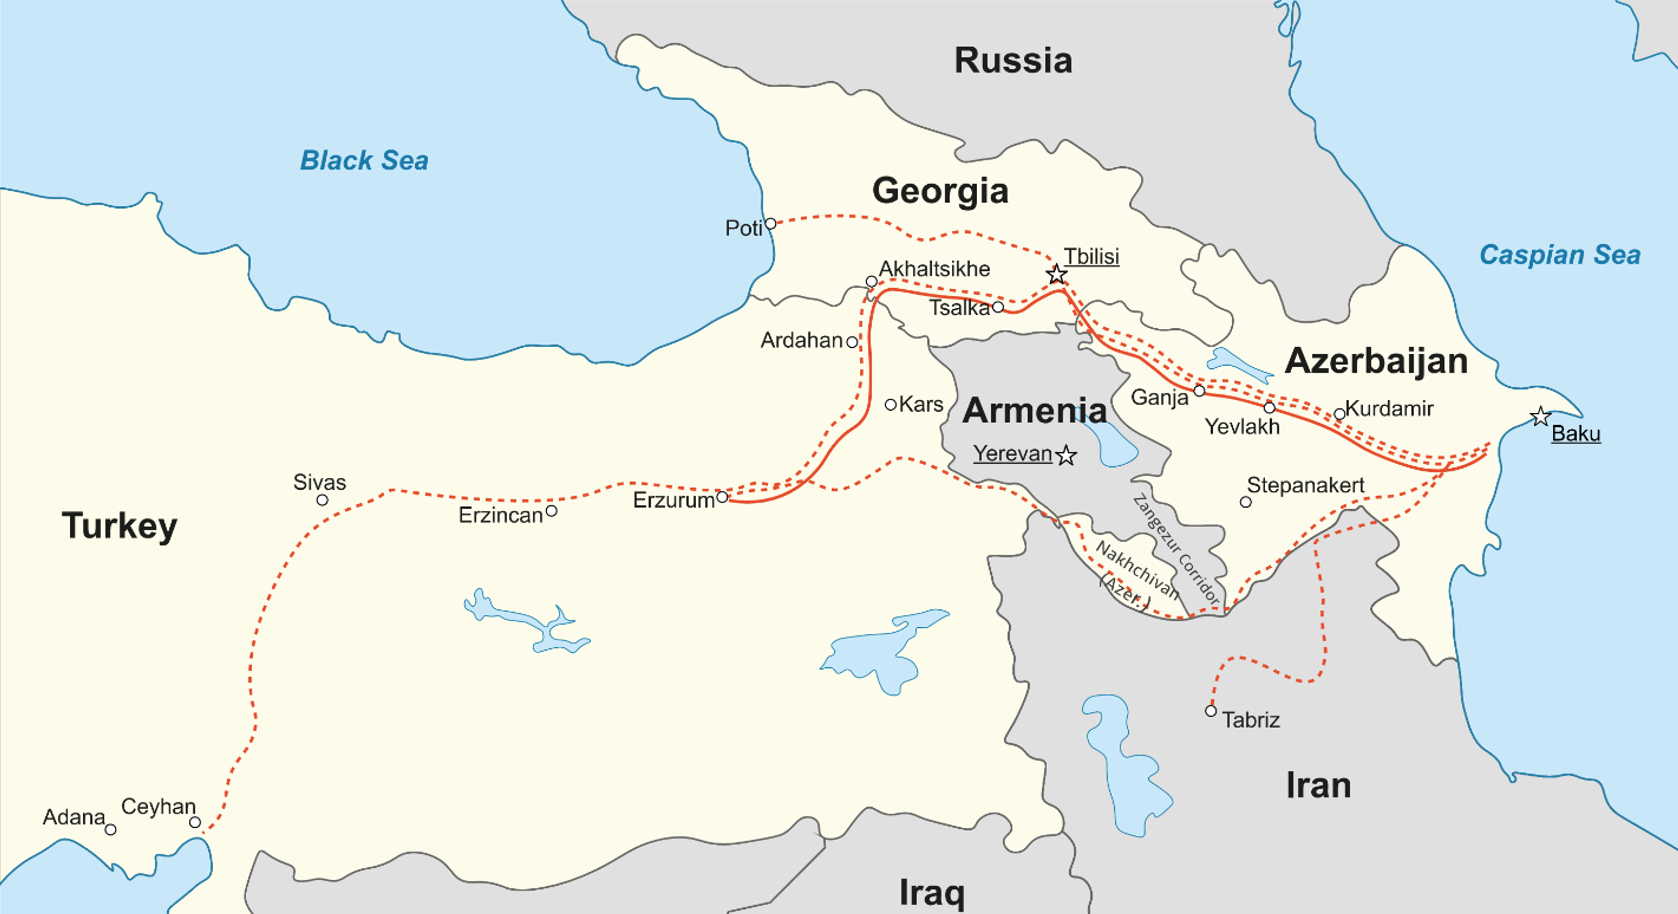 Armenia-Azerbaijan conflict has deep roots